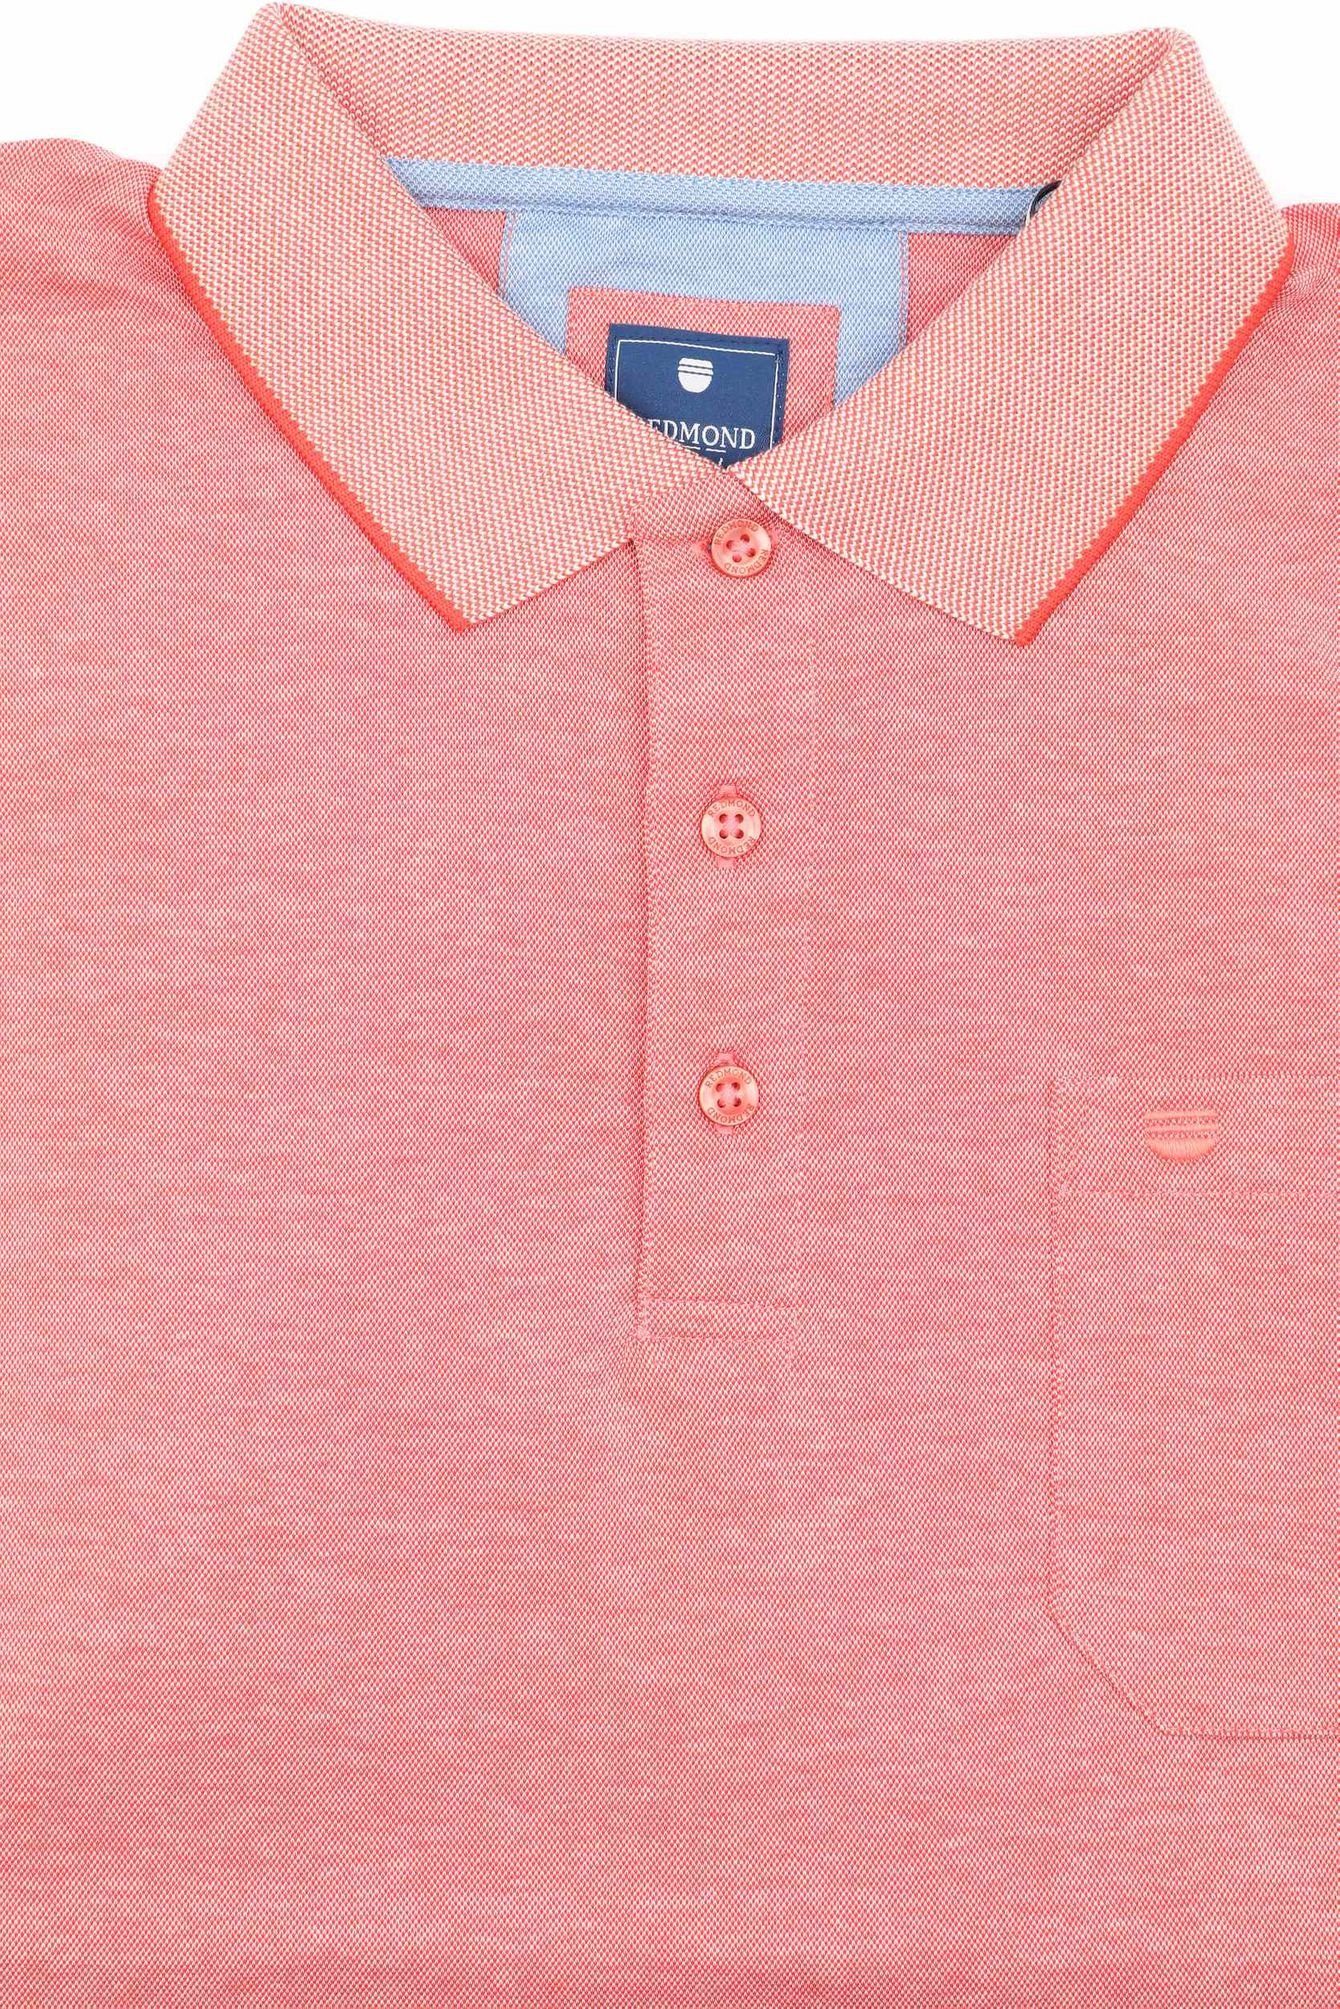 Redmond Poloshirt Orange(25) Poloshirt